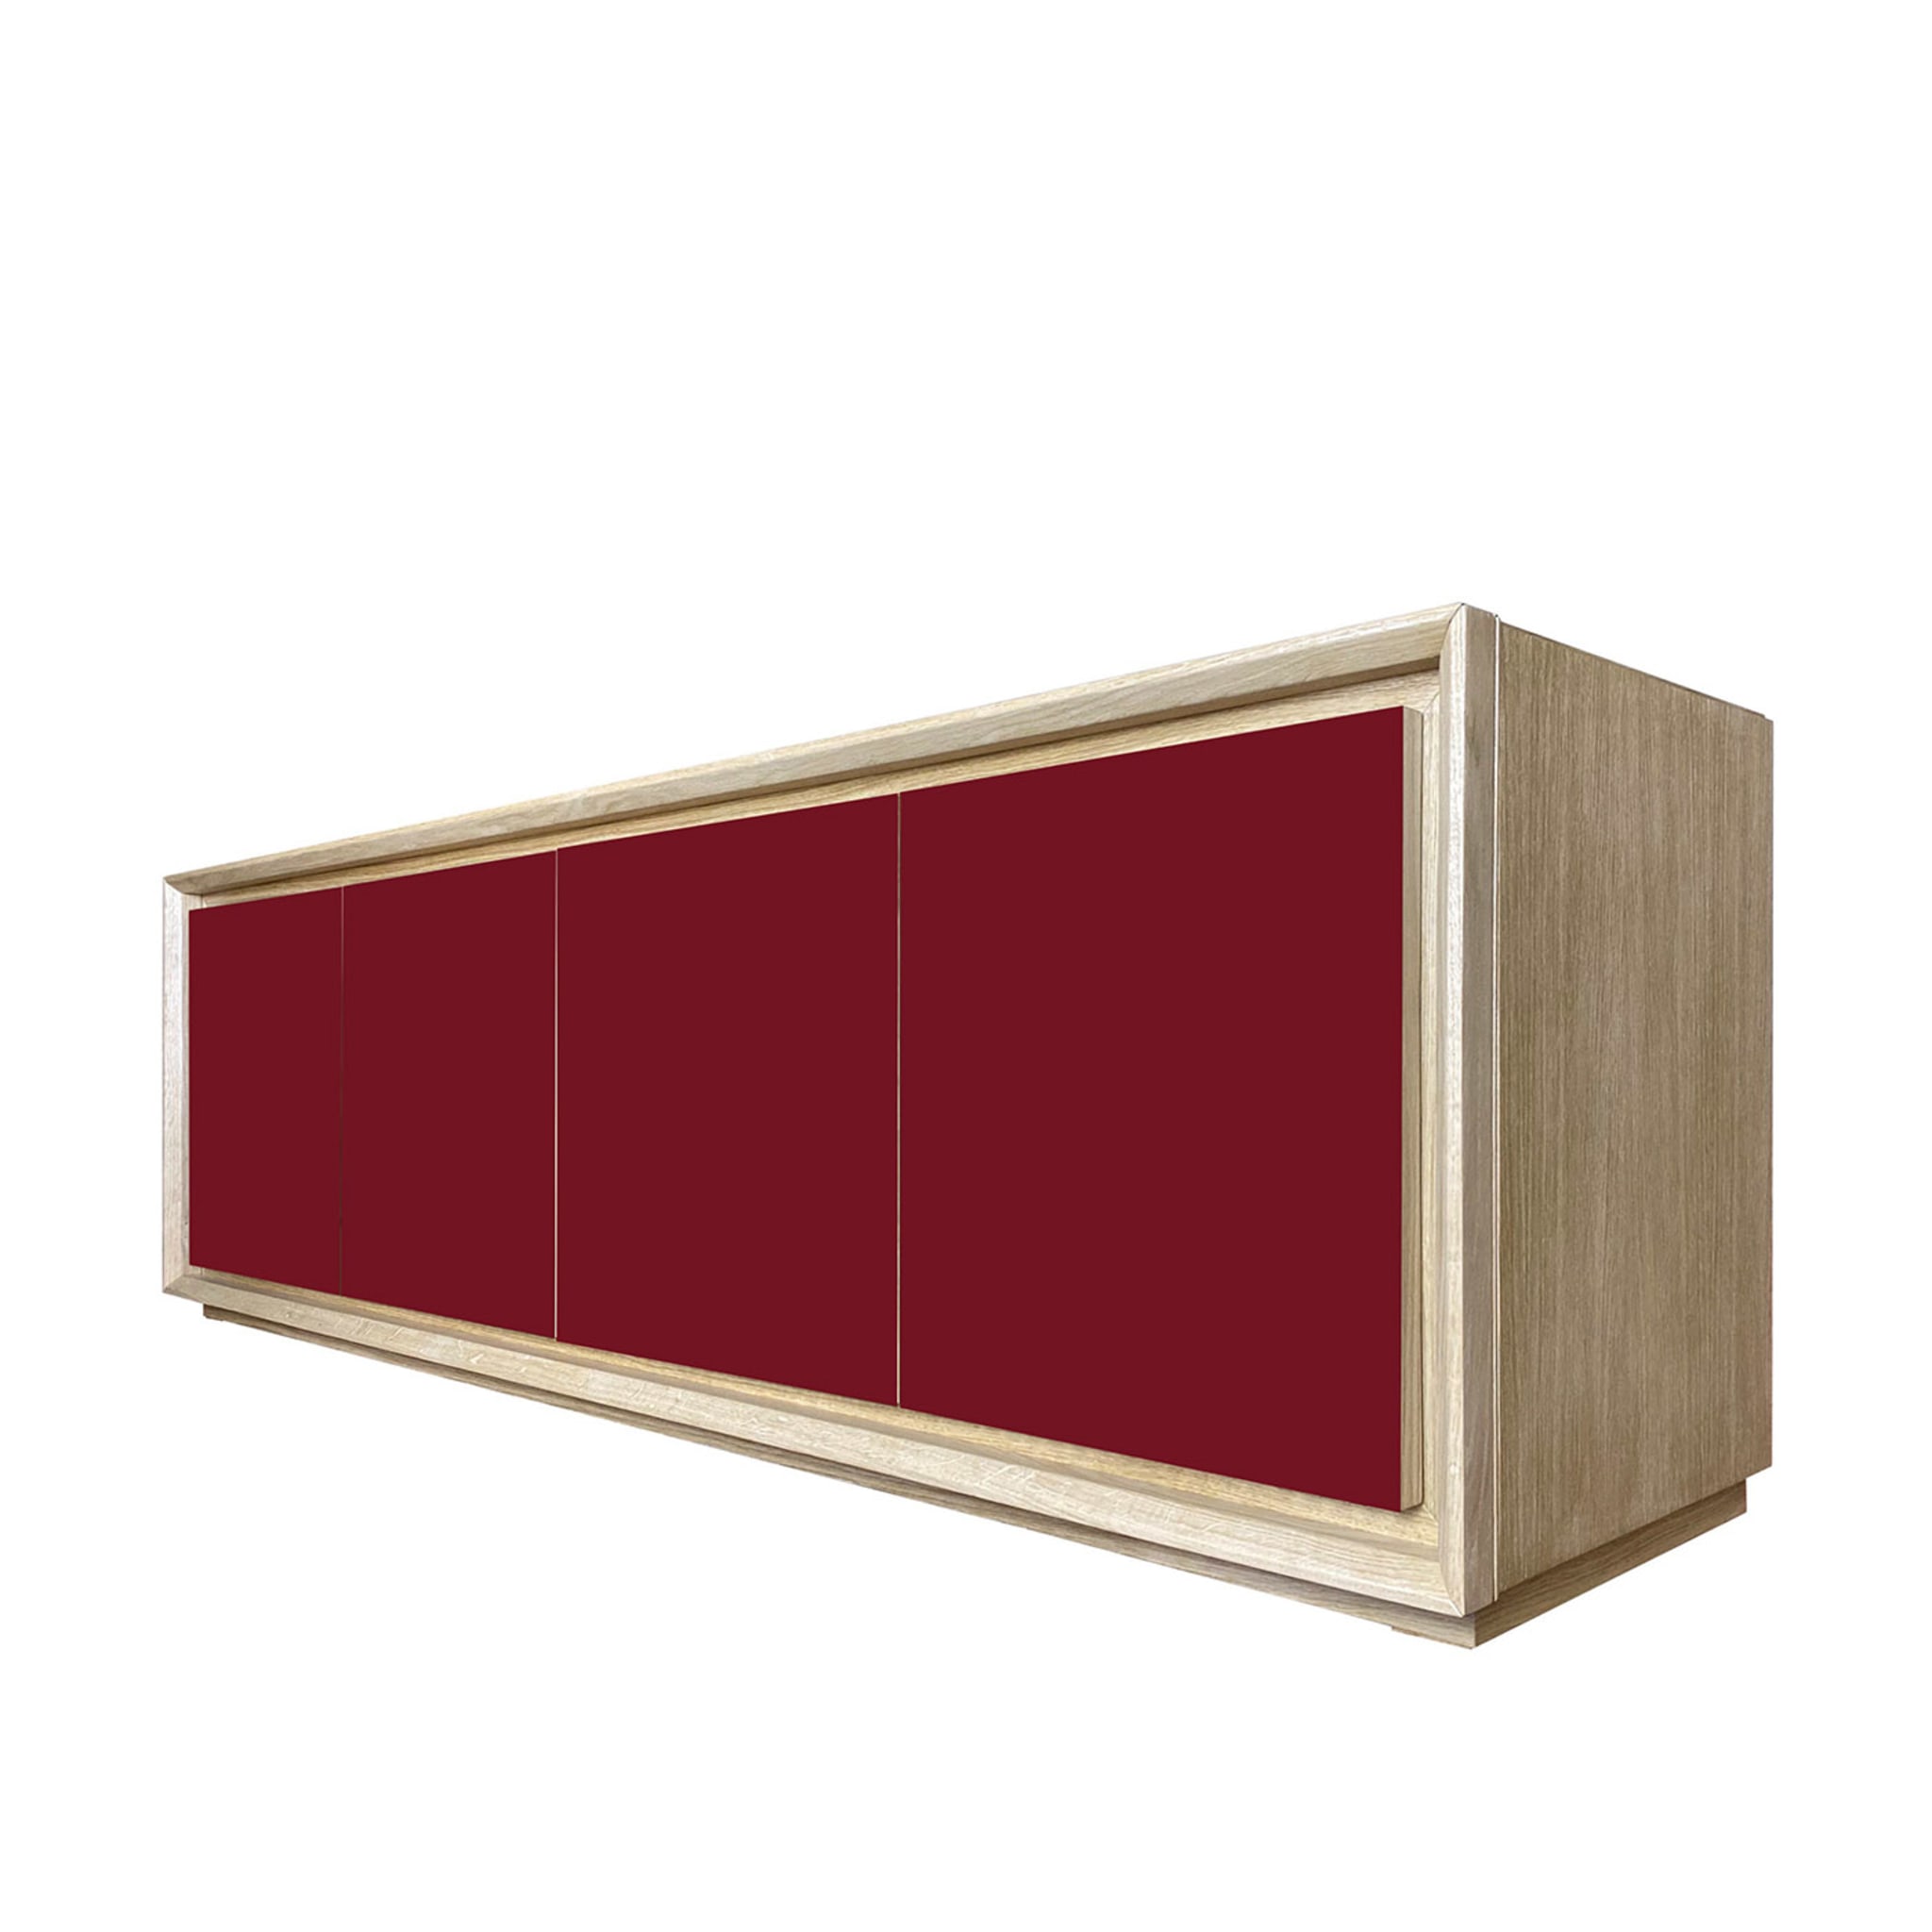 Rubino 3-Door Ruby Sideboard by Mascia Meccani - Alternative view 3